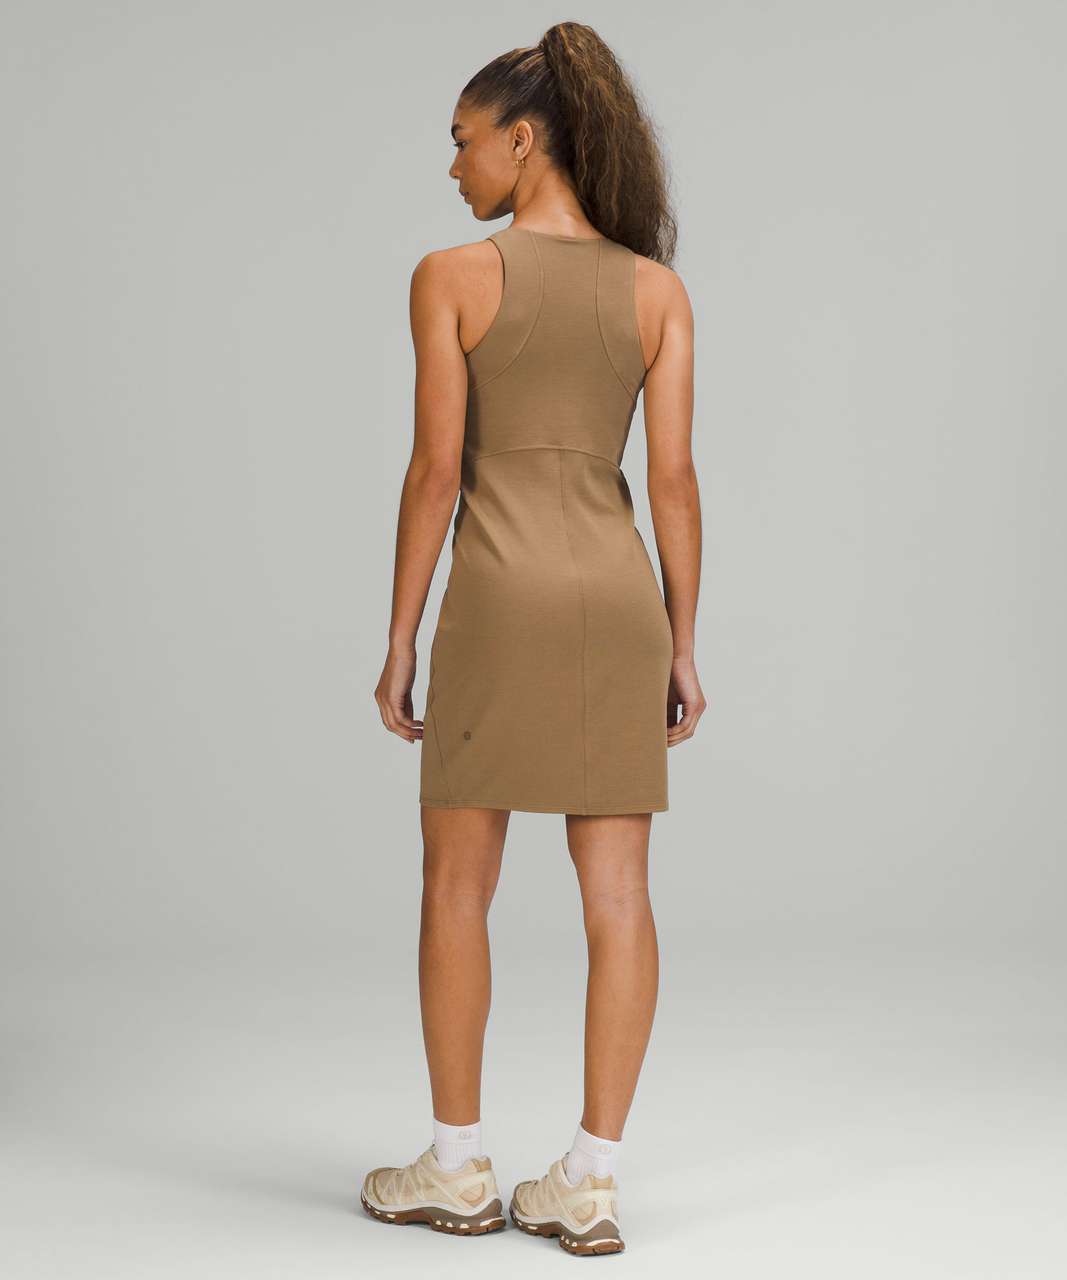 Lululemon Slim-Fit Above-Knee Dress - Artifact